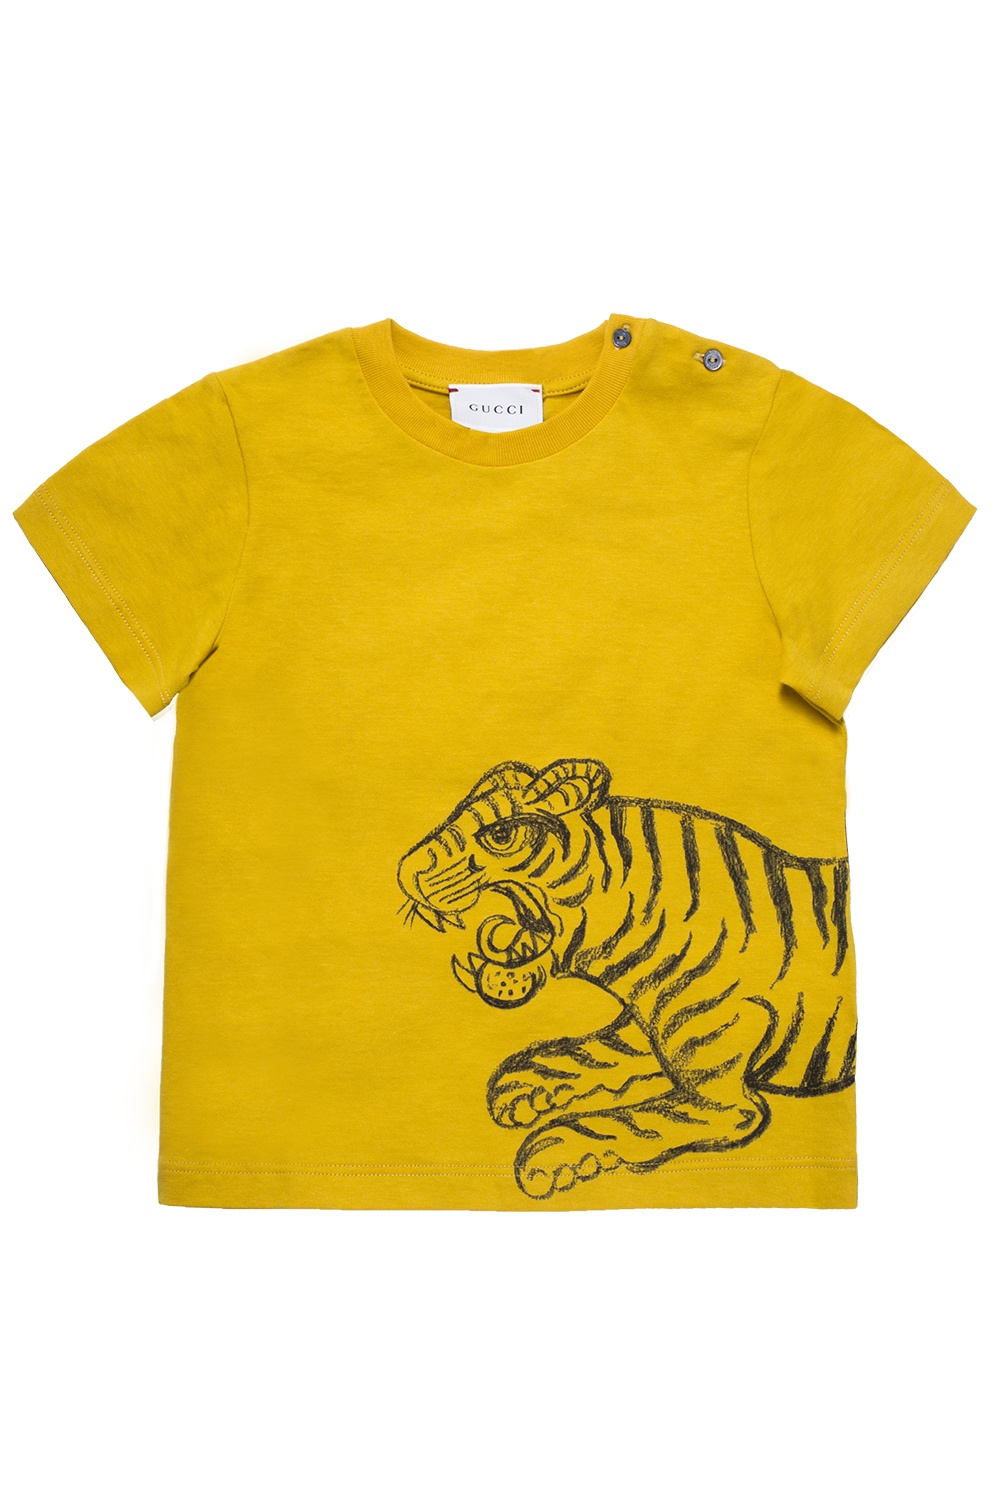 Gucci Kids Tiger-printed T-shirt | Kids's Baby (0-36 months) | Vitkac